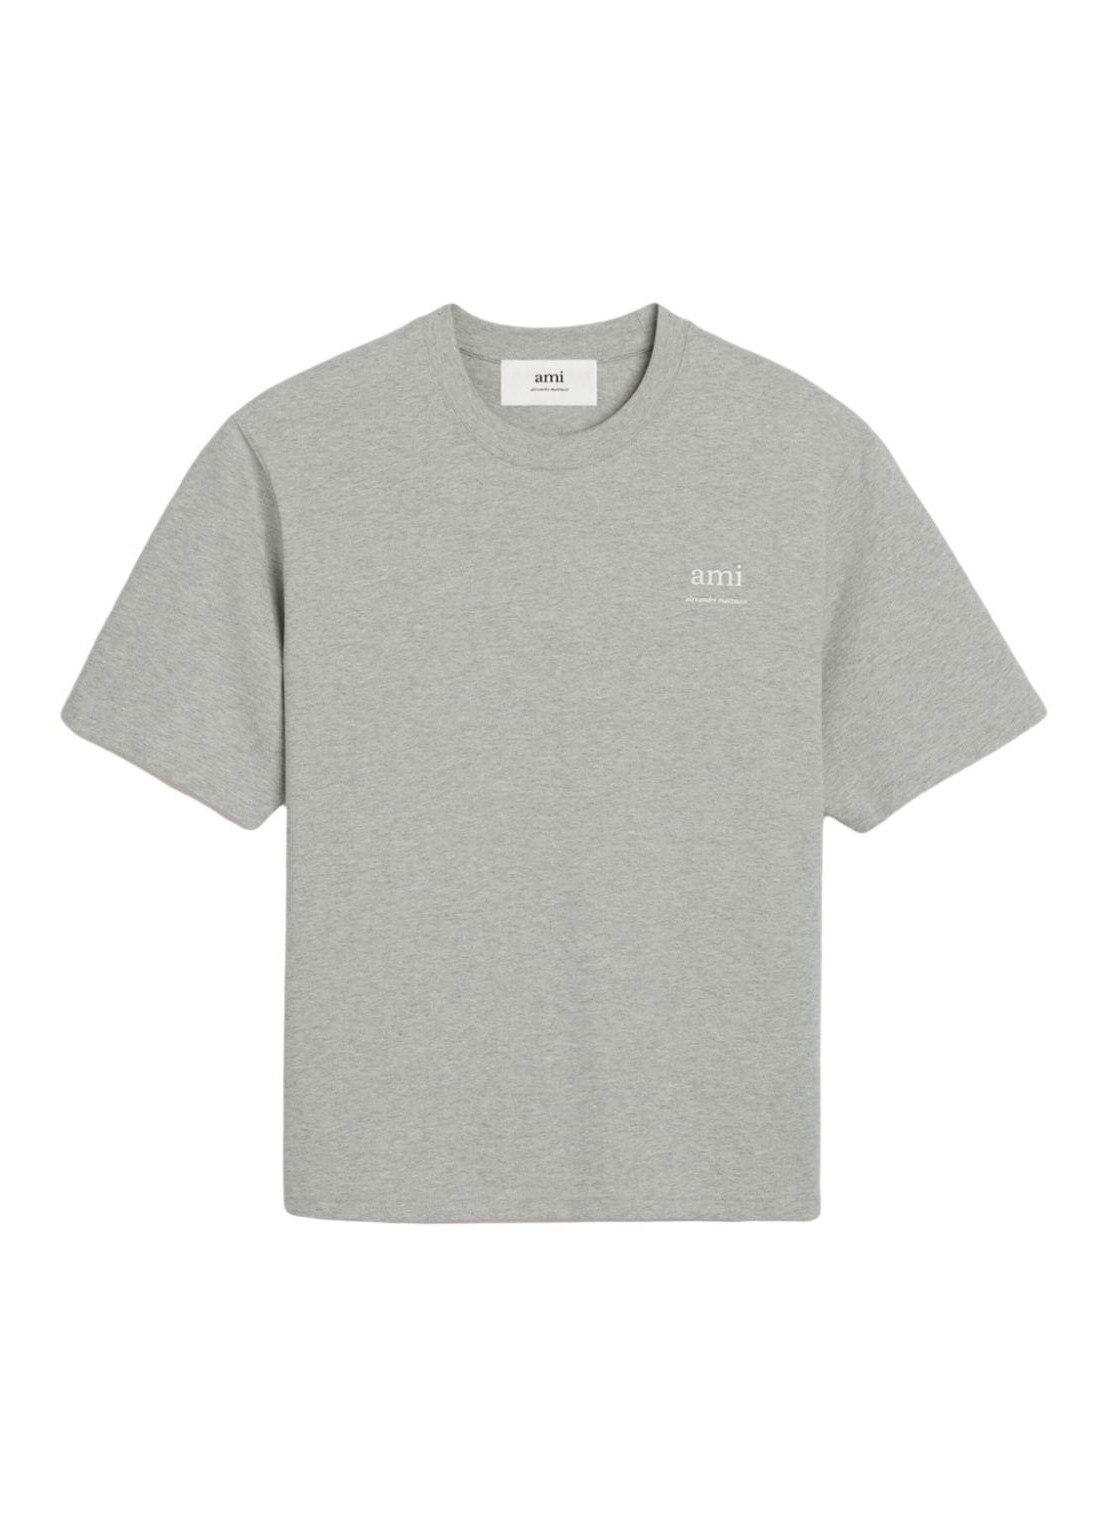 Camiseta ami t-shirt mantshirt ami am - uts024726 0951 talla gris
 